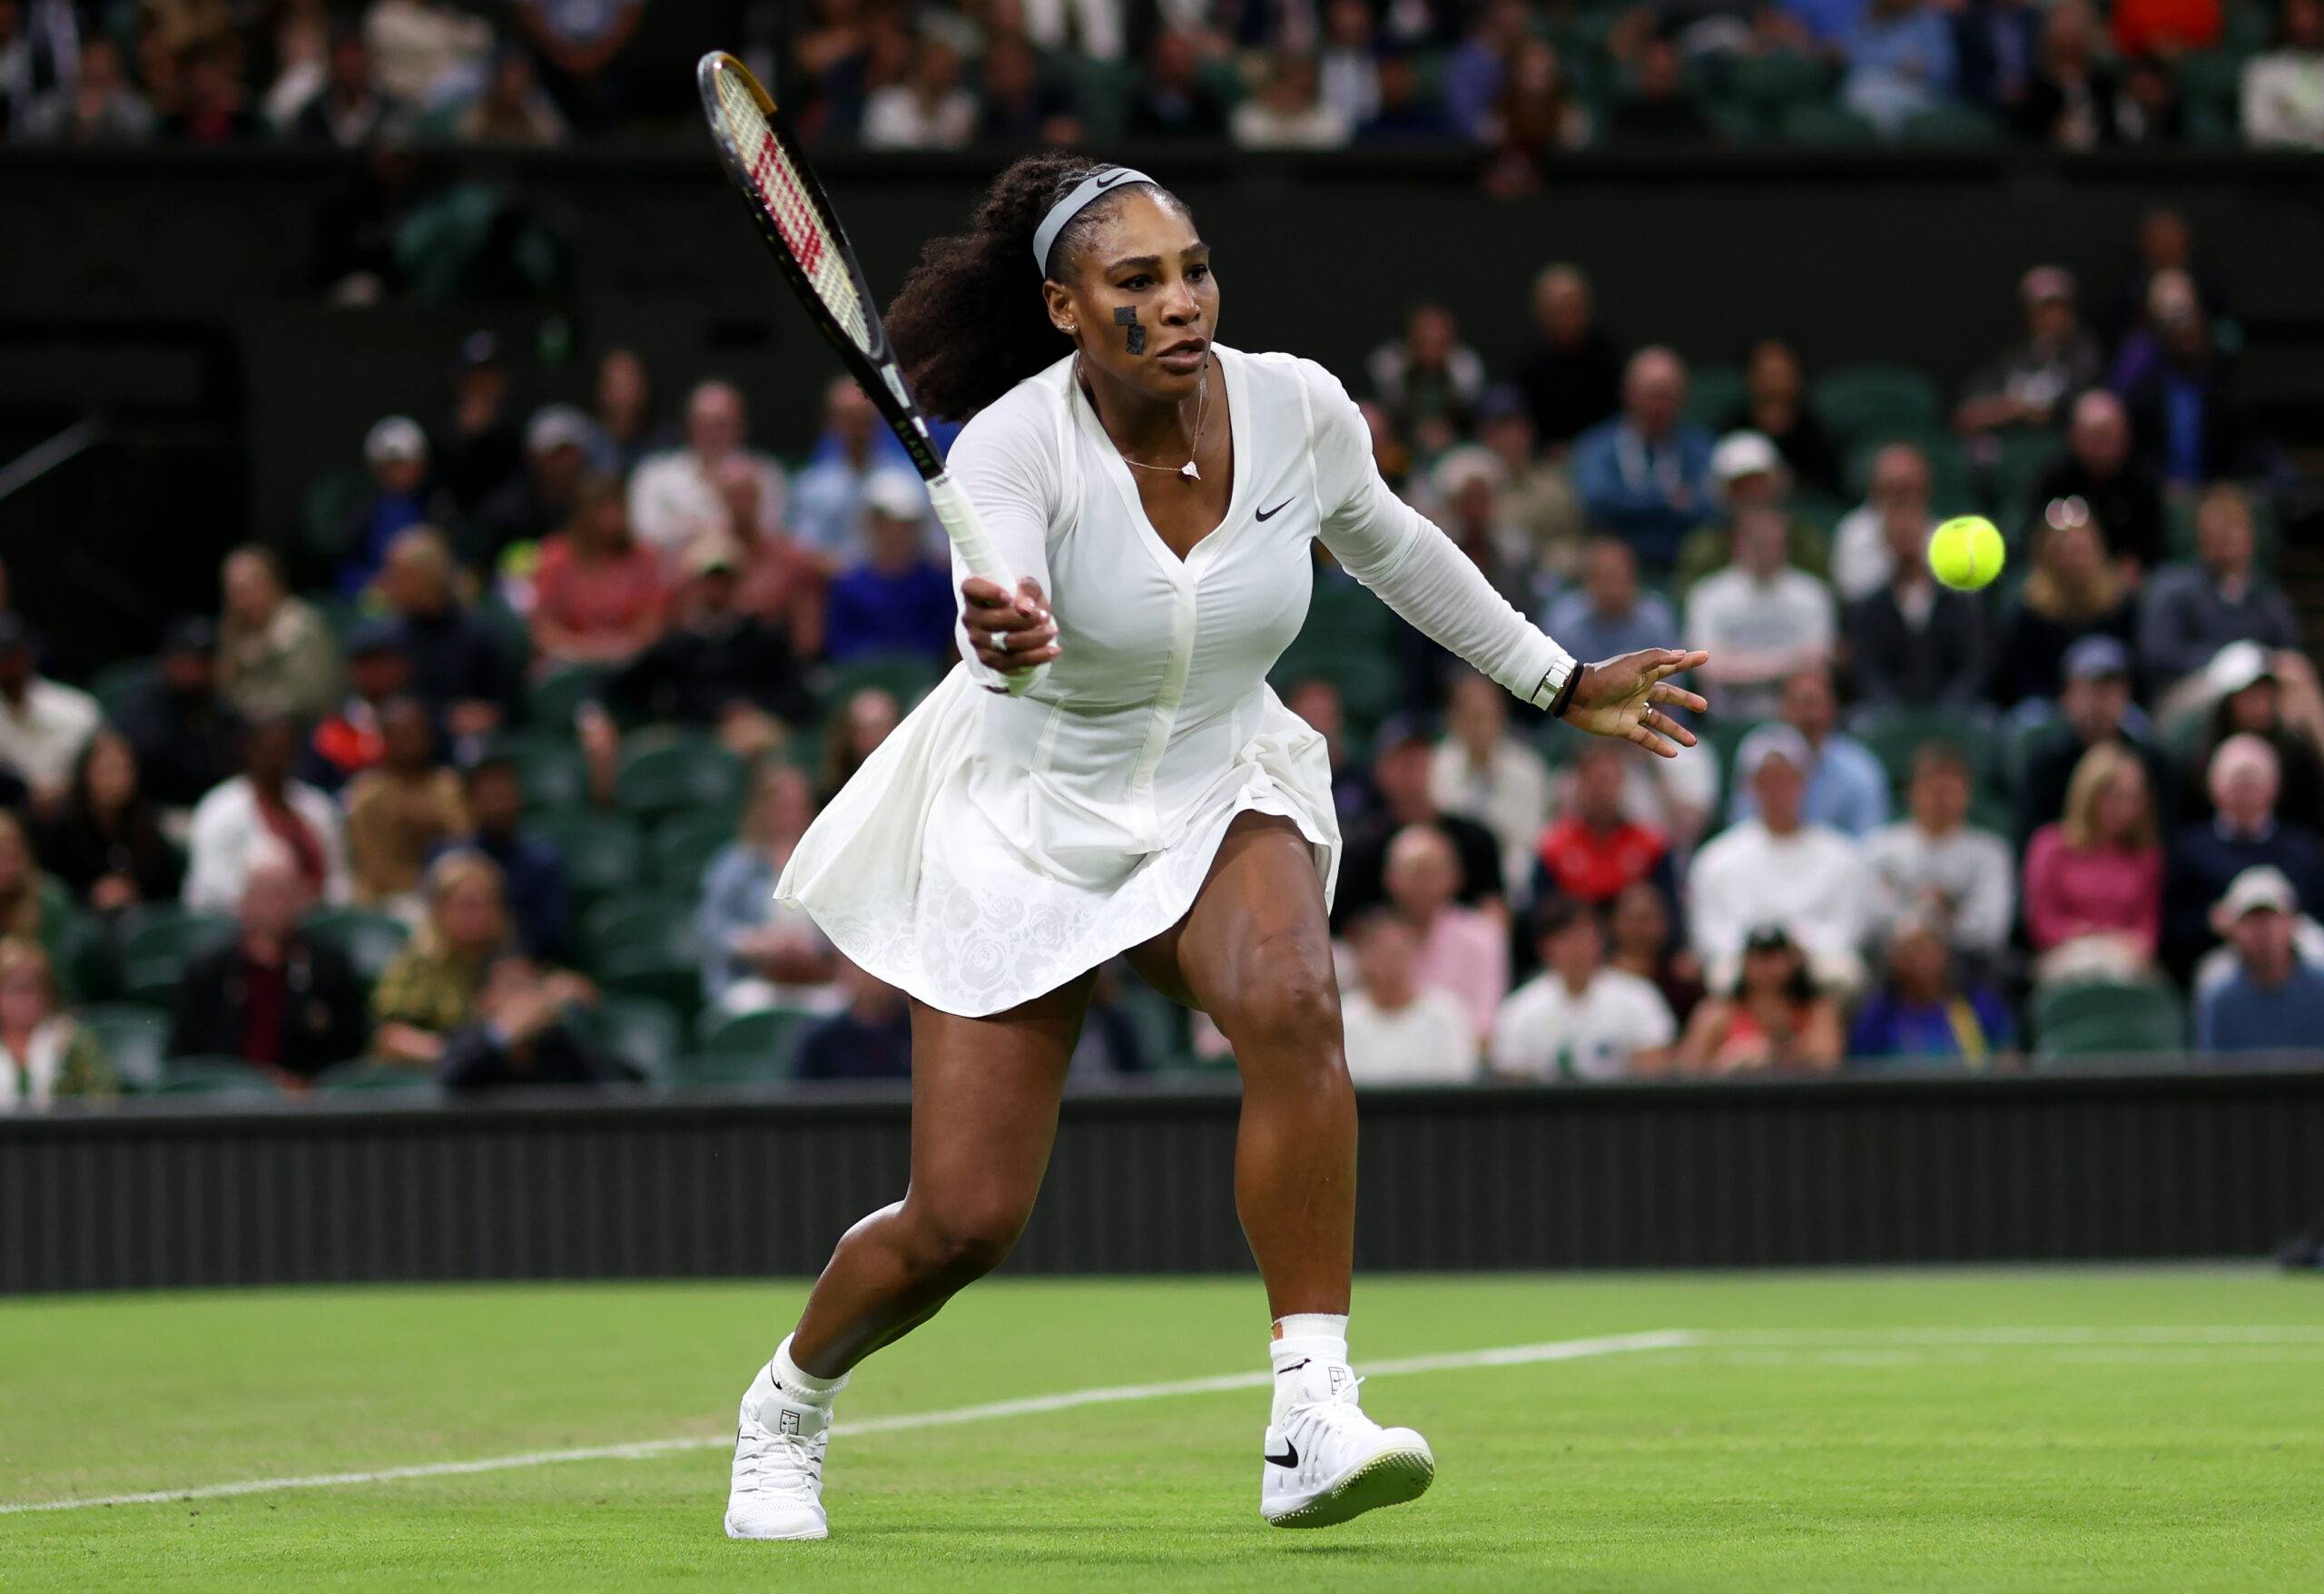 Tennis legend Serena Williams